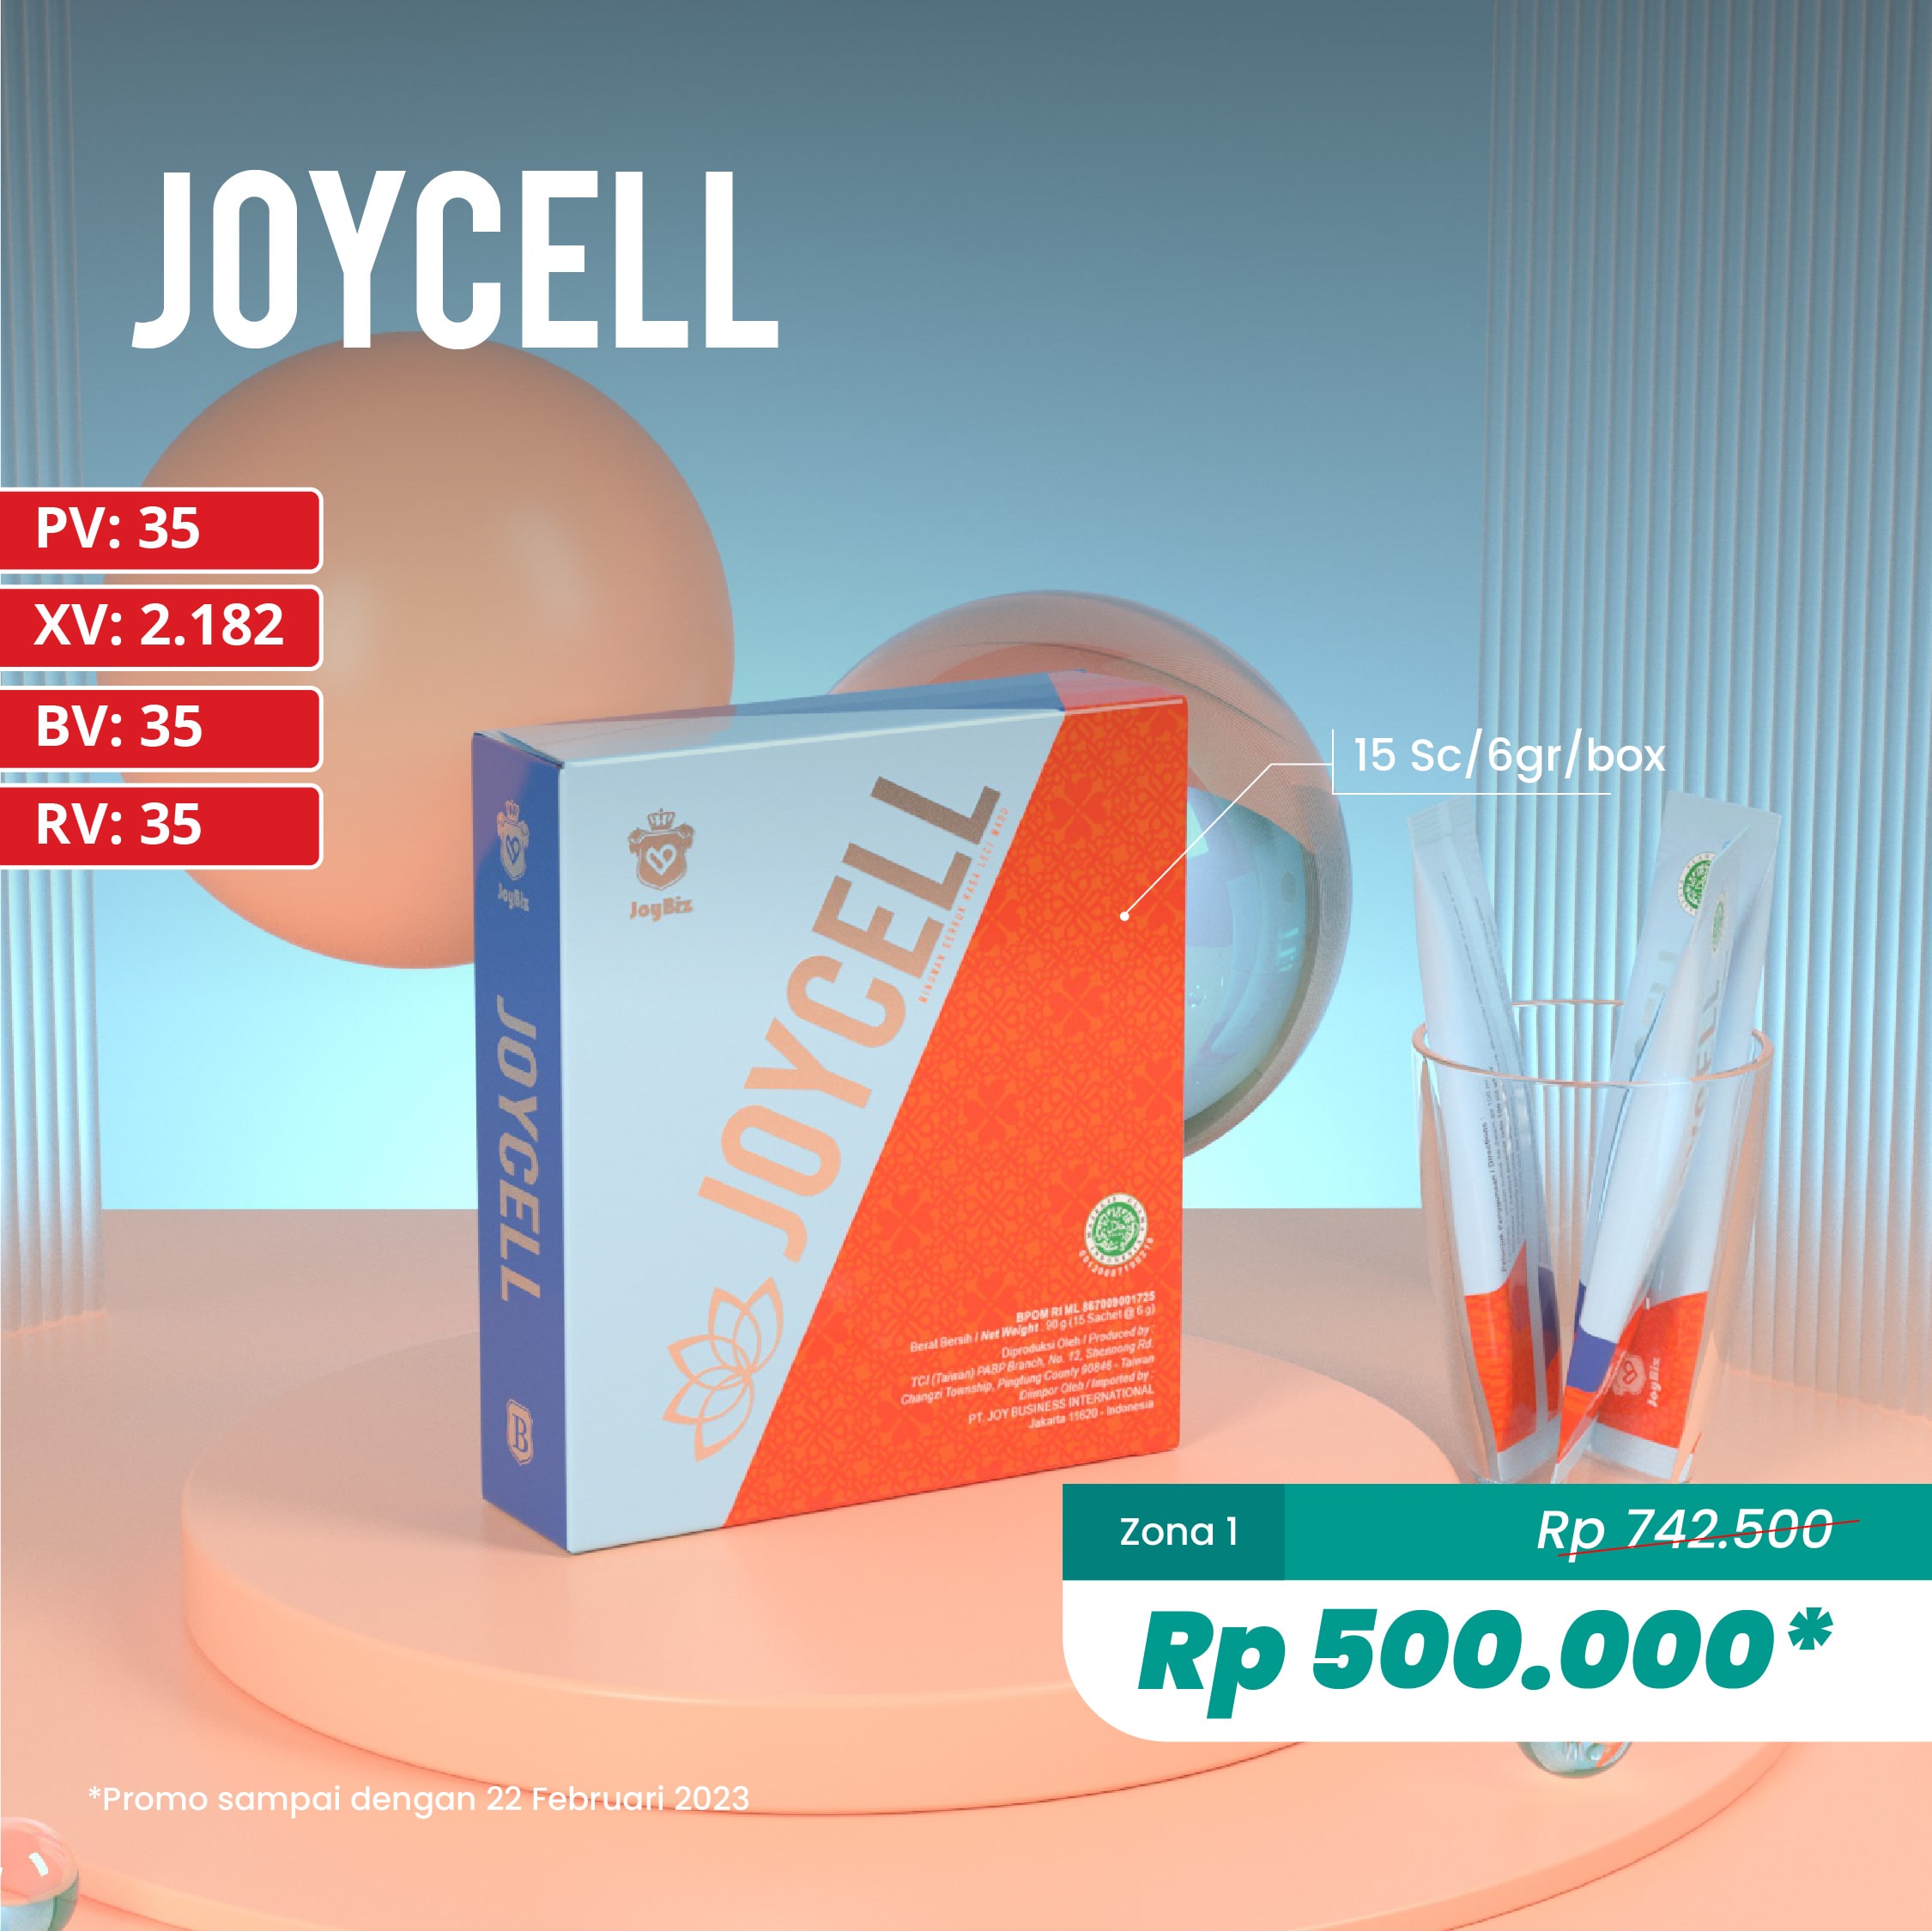 Joycell (J35)